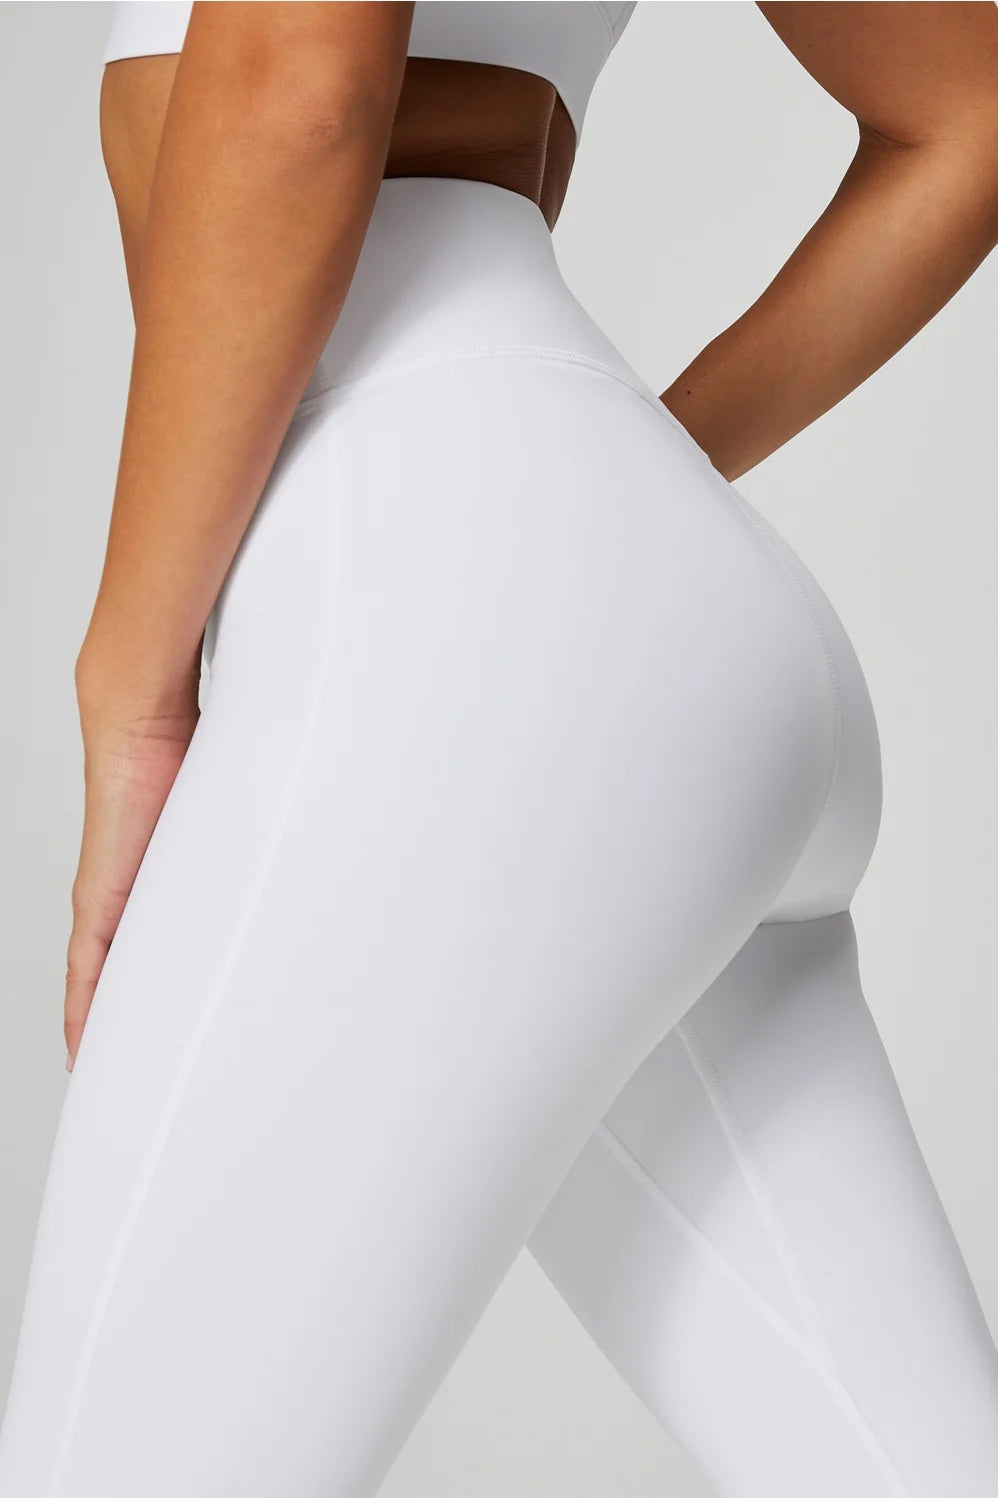 Essential white leggings side view